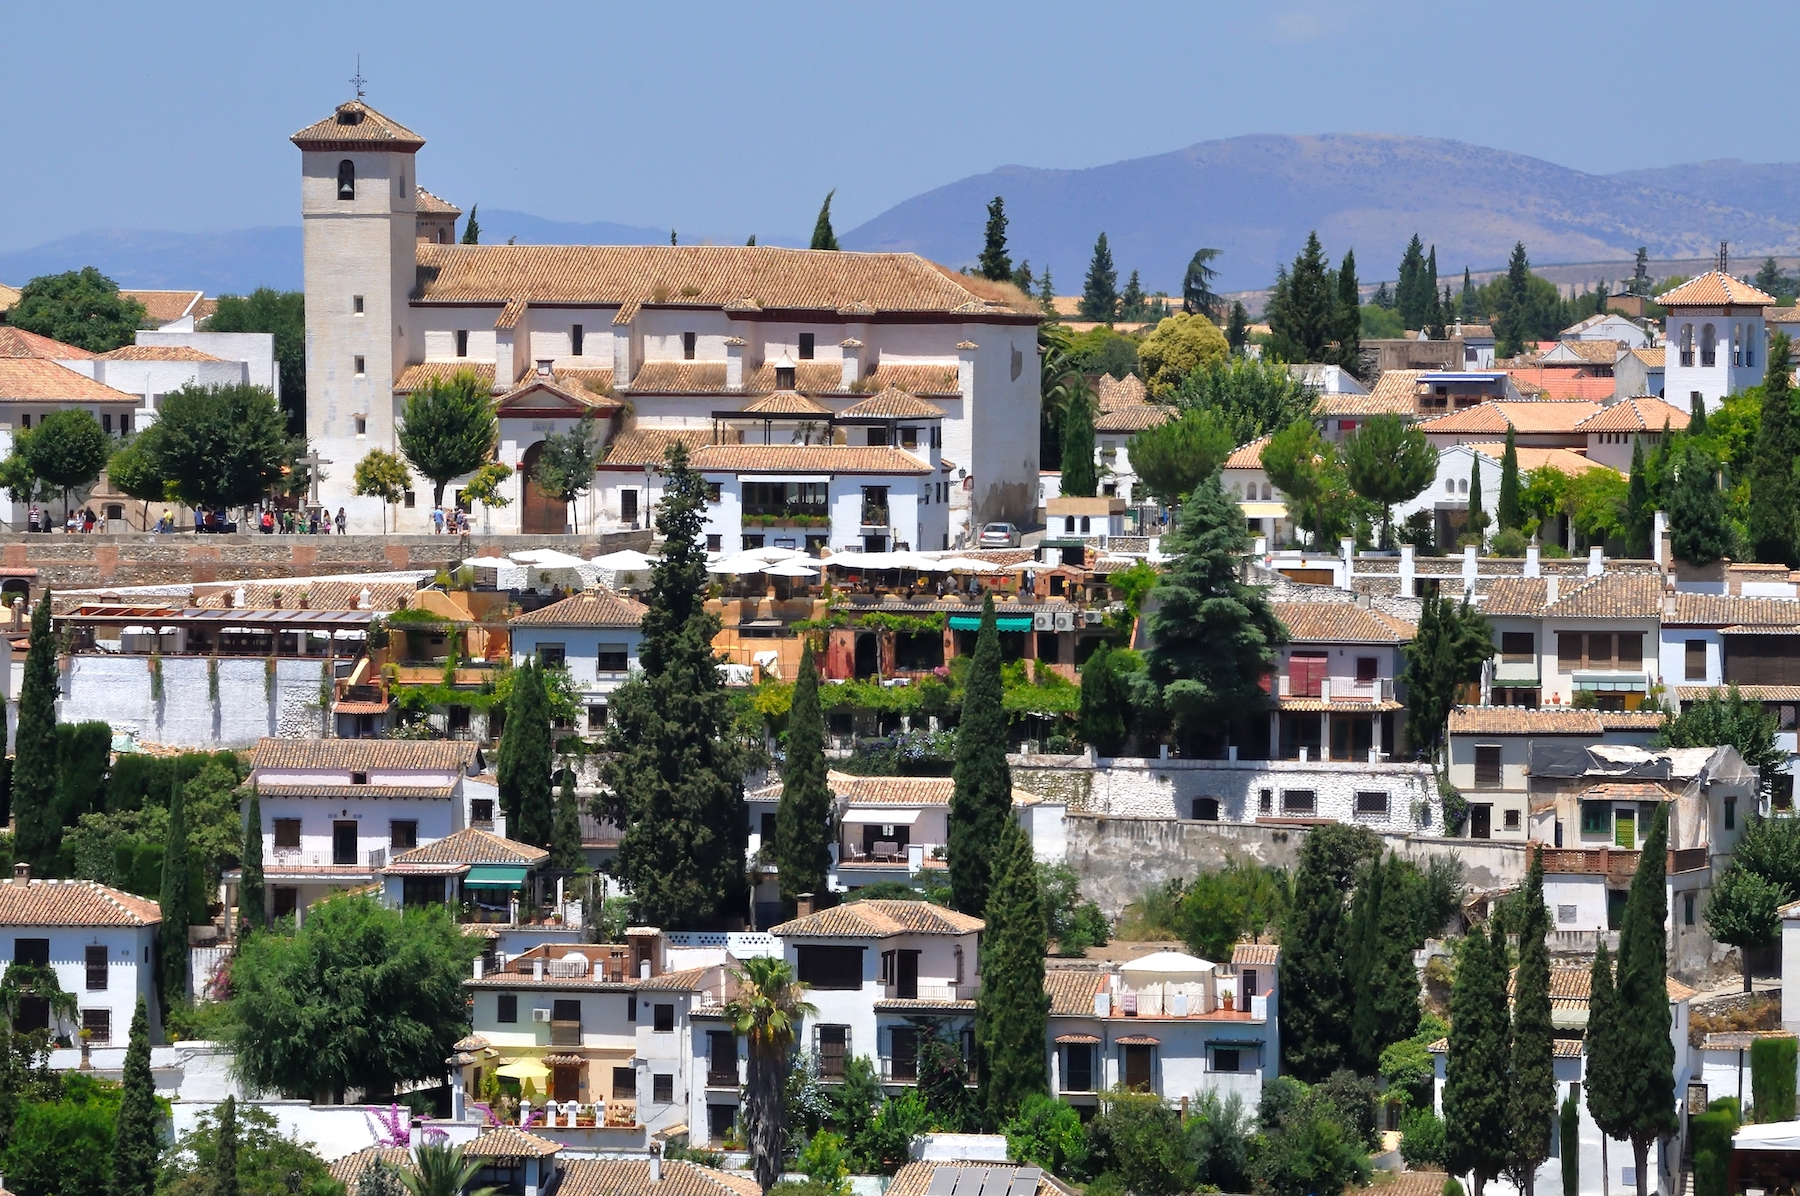 Cómo pasar un fin de semana perfecto en hermosa Granada, España - 15